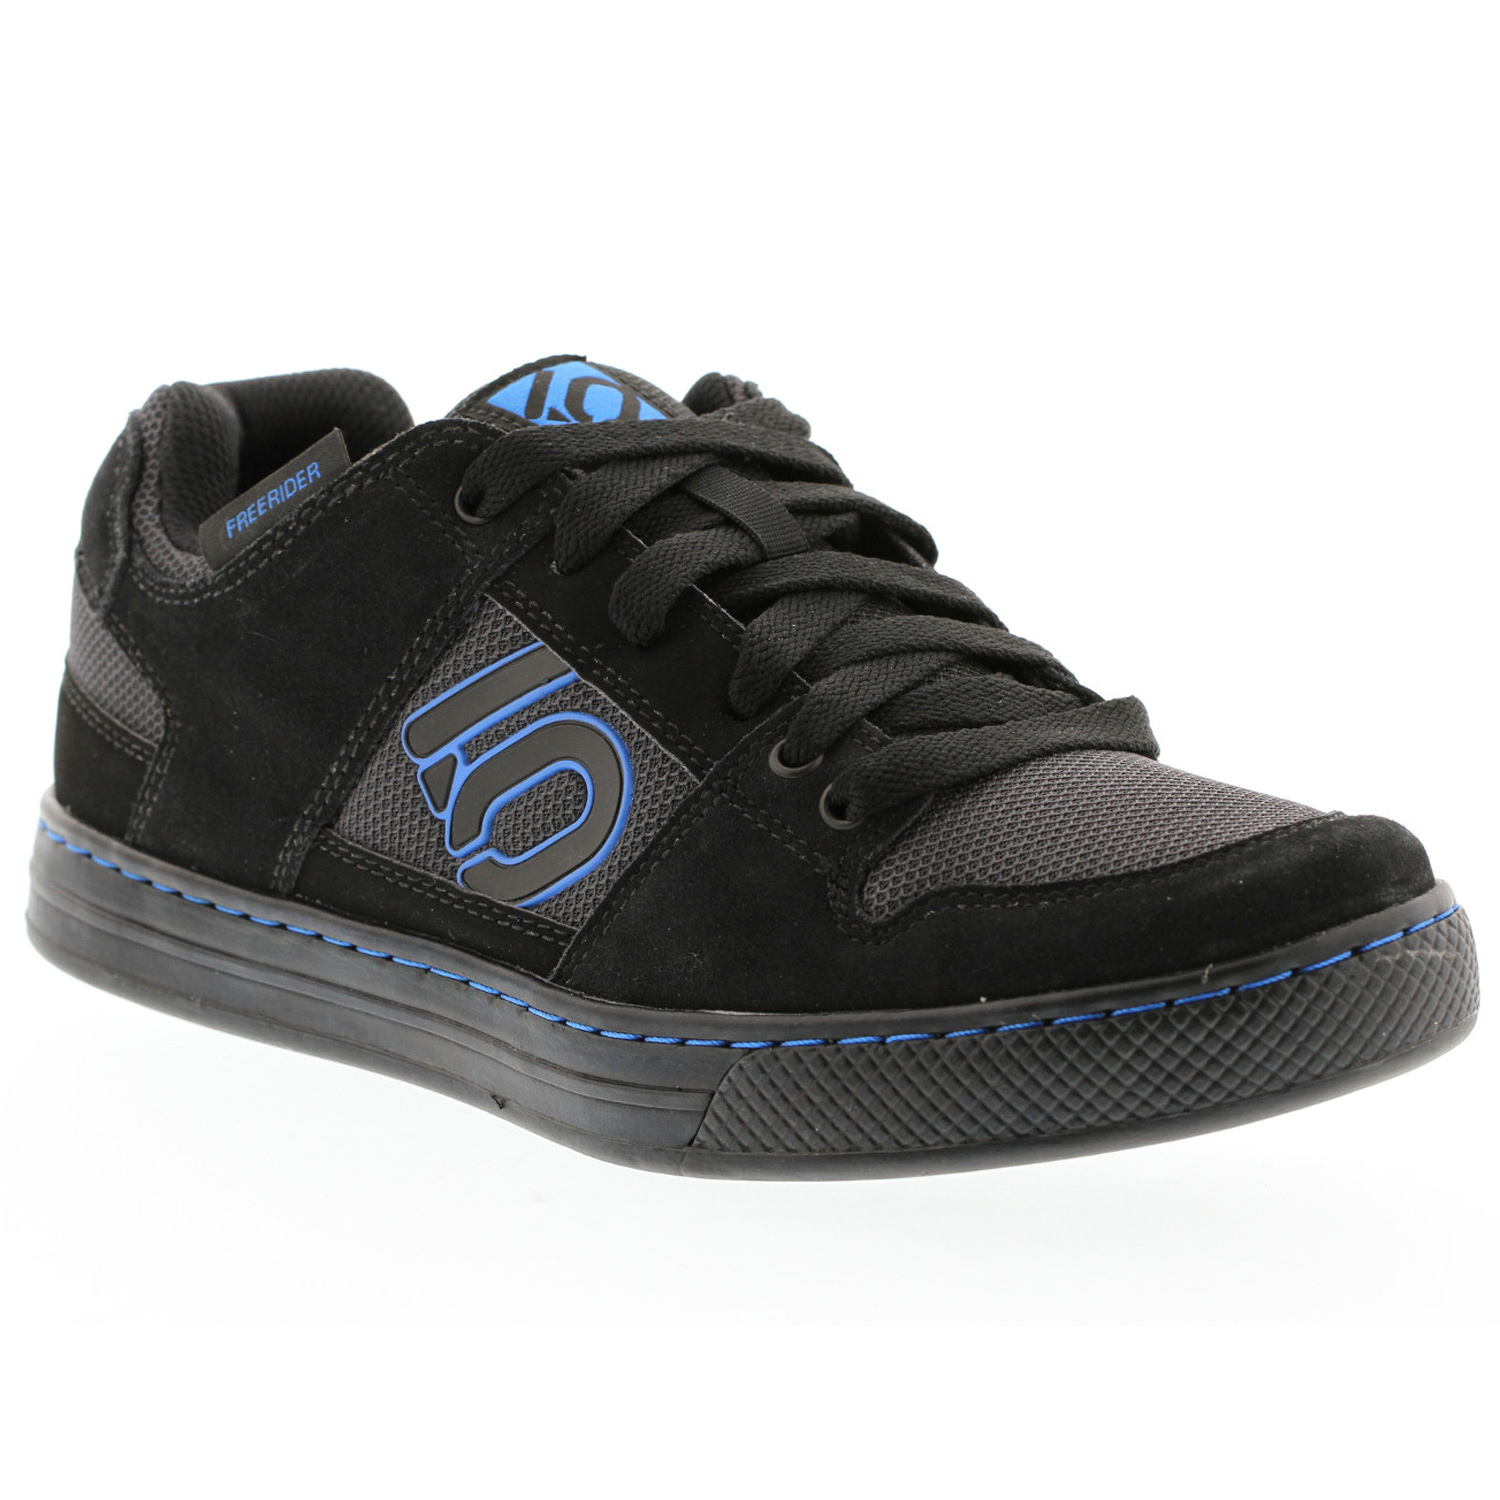 Five Ten Chaussures VTT Freerider Black/Blue